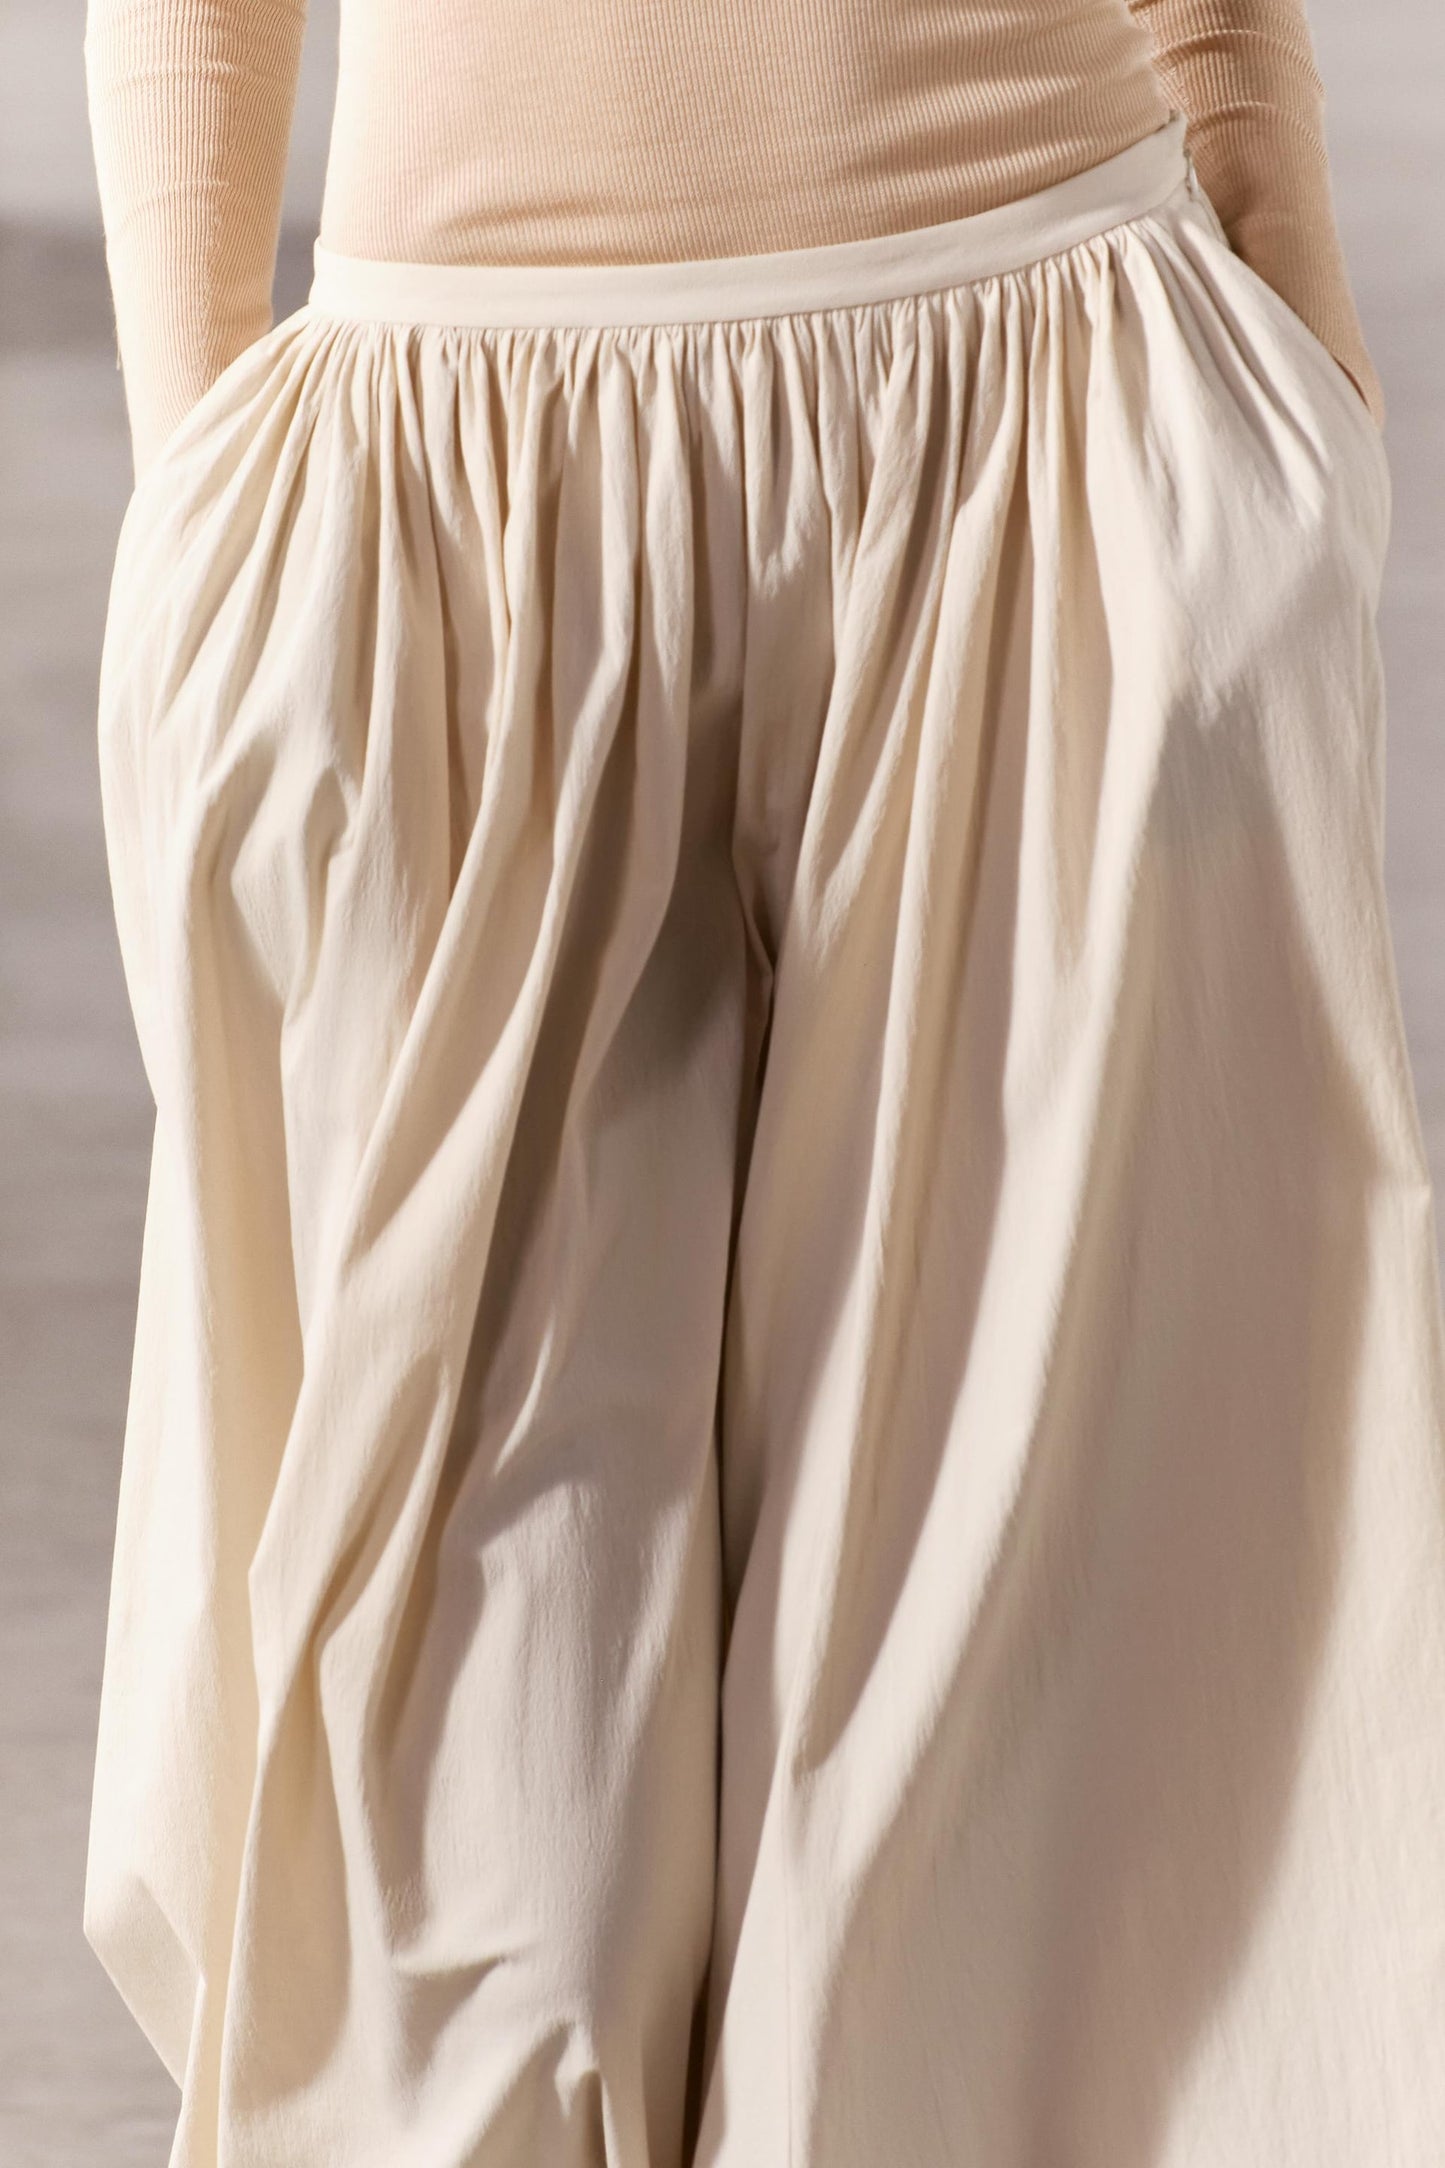 Midi skirt with scalloped waistband